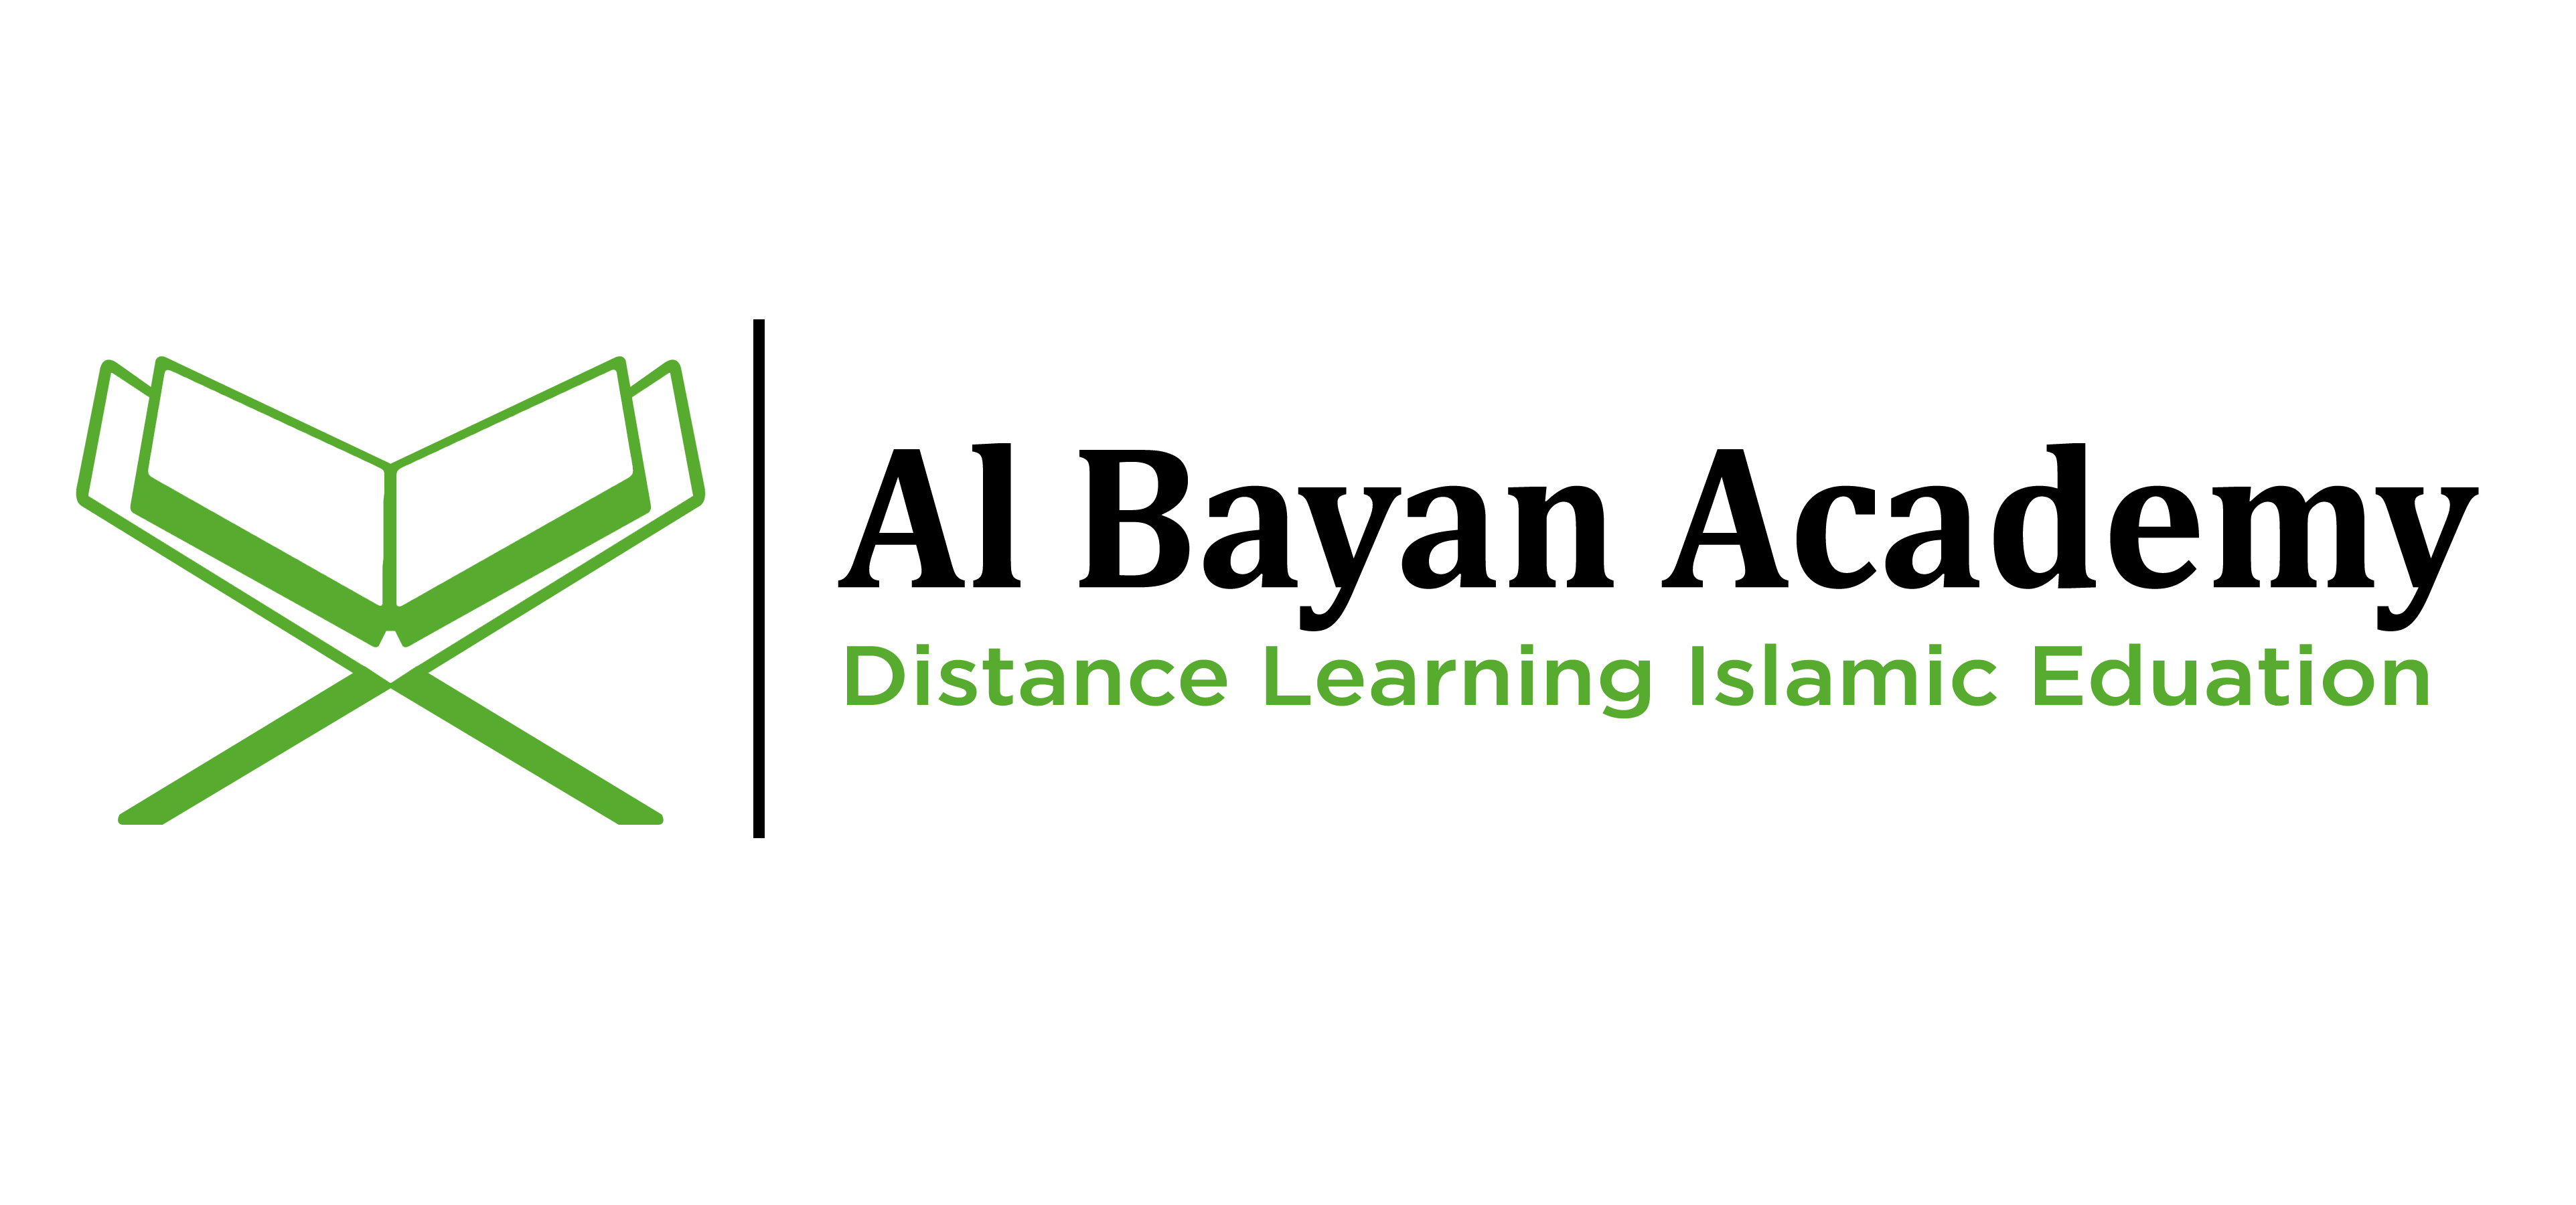 Al Bayan Academy – Distance Learning Islamic Education